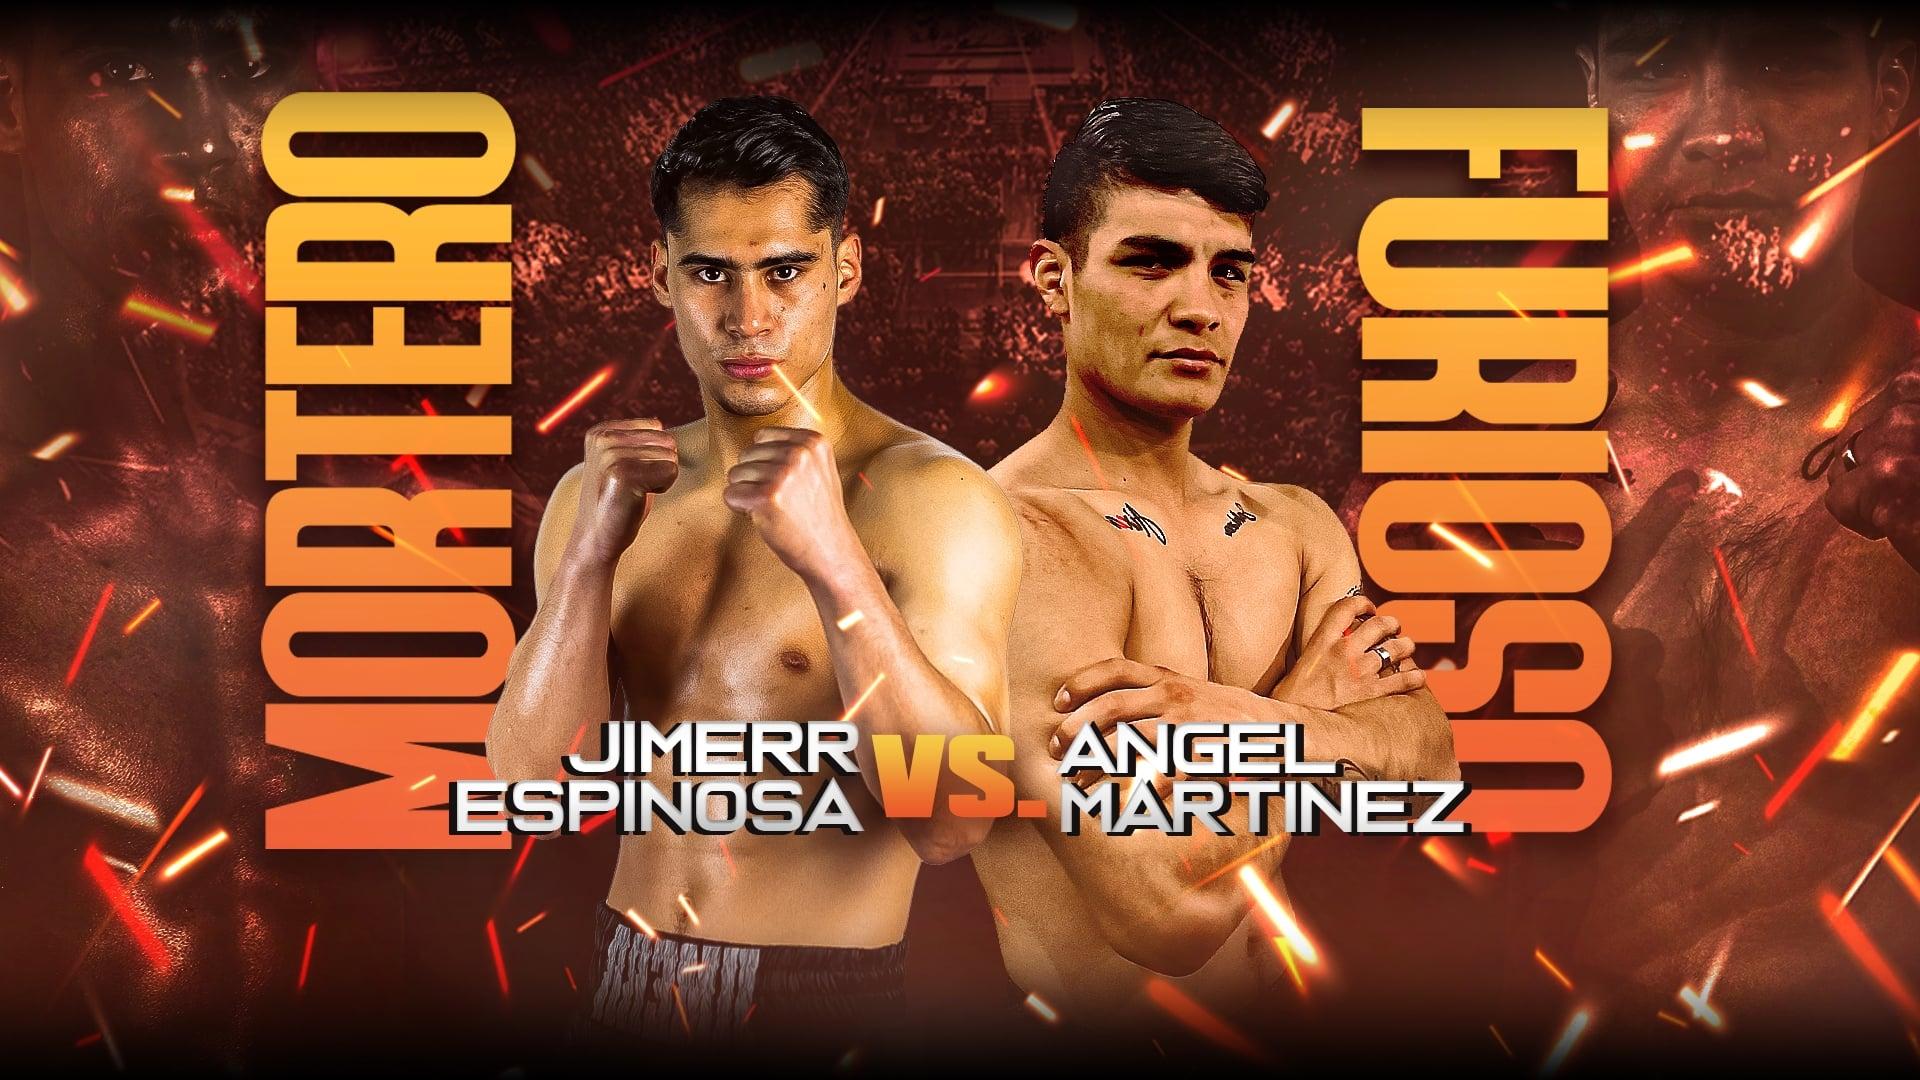 Jimerr Espinosa vs. Angel Hernandez backdrop